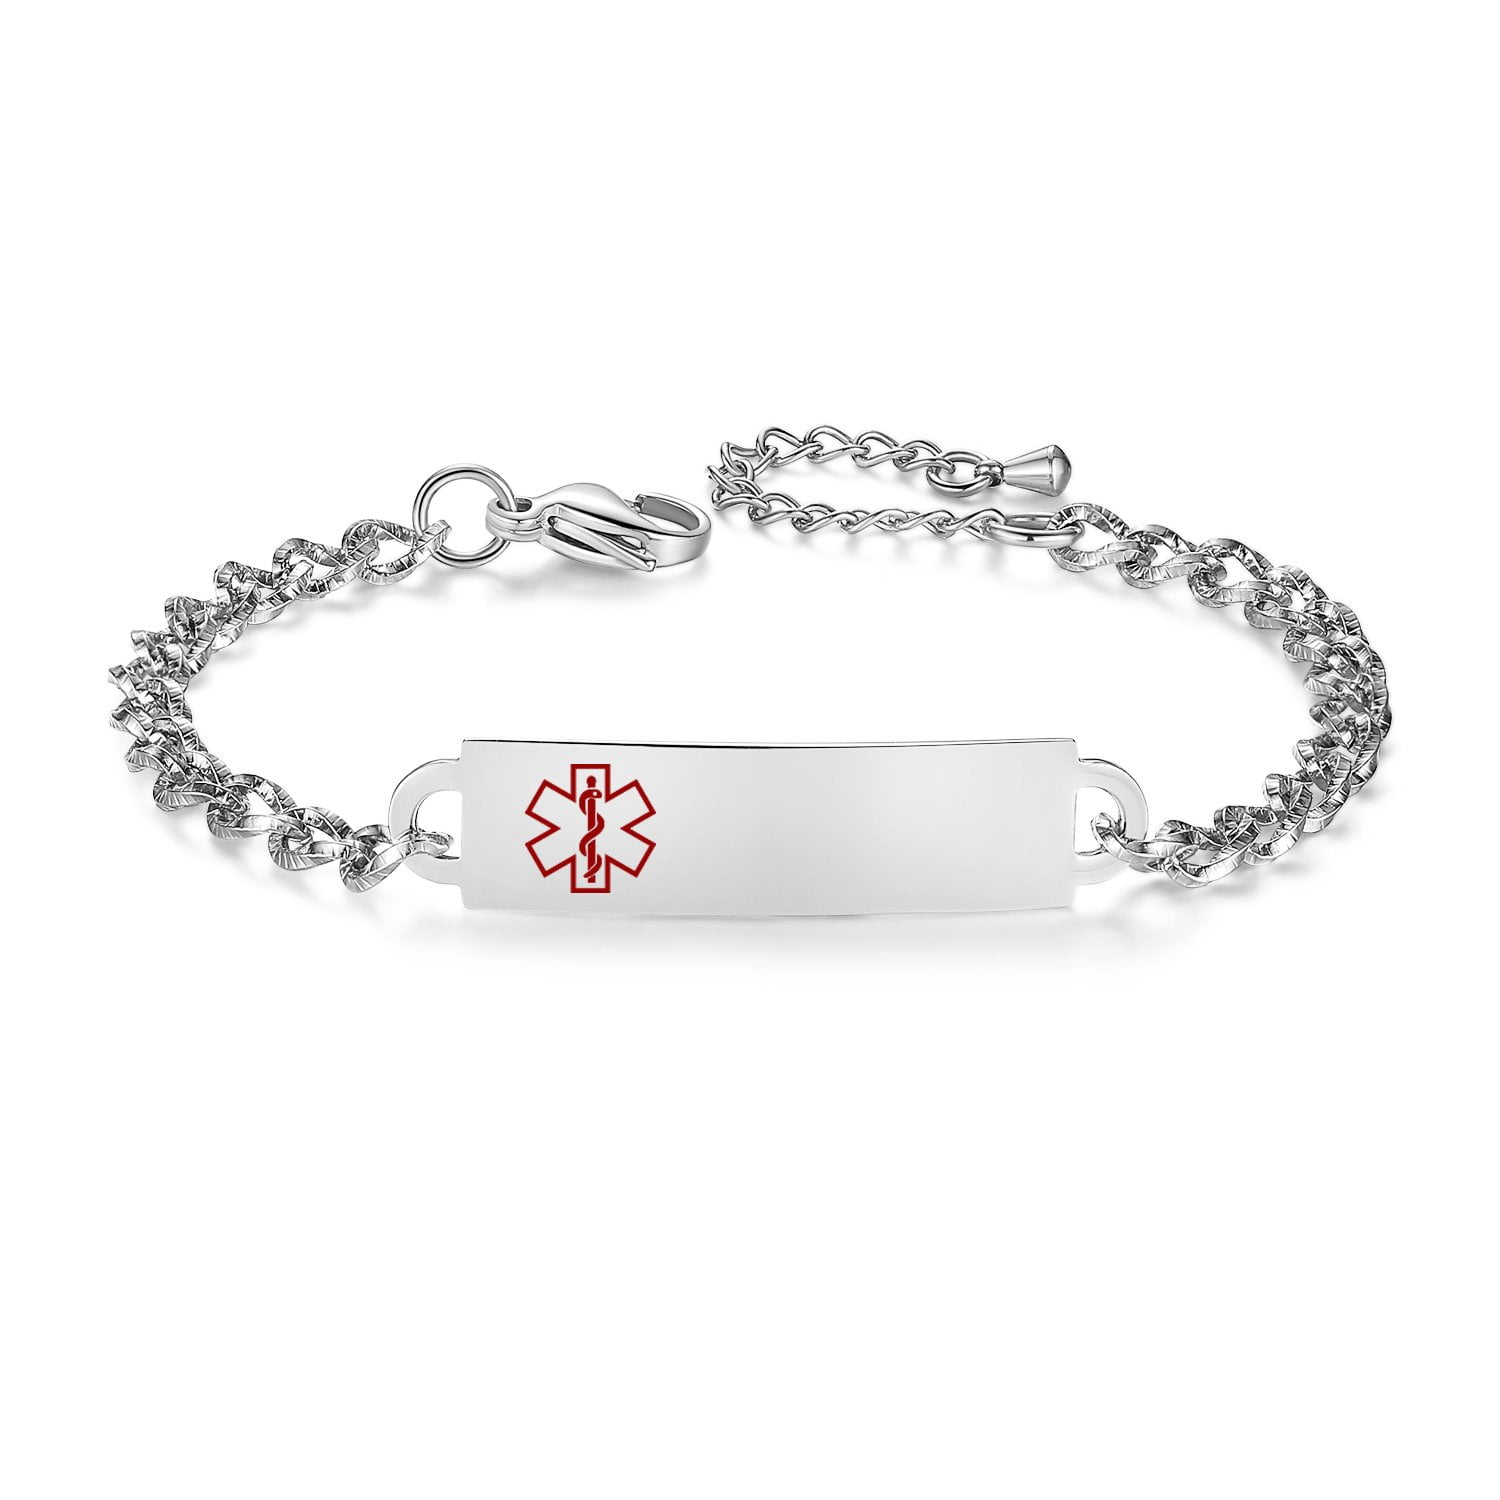 Personalized Medical Alert Bracelets  Custom Medical ID Jewelry